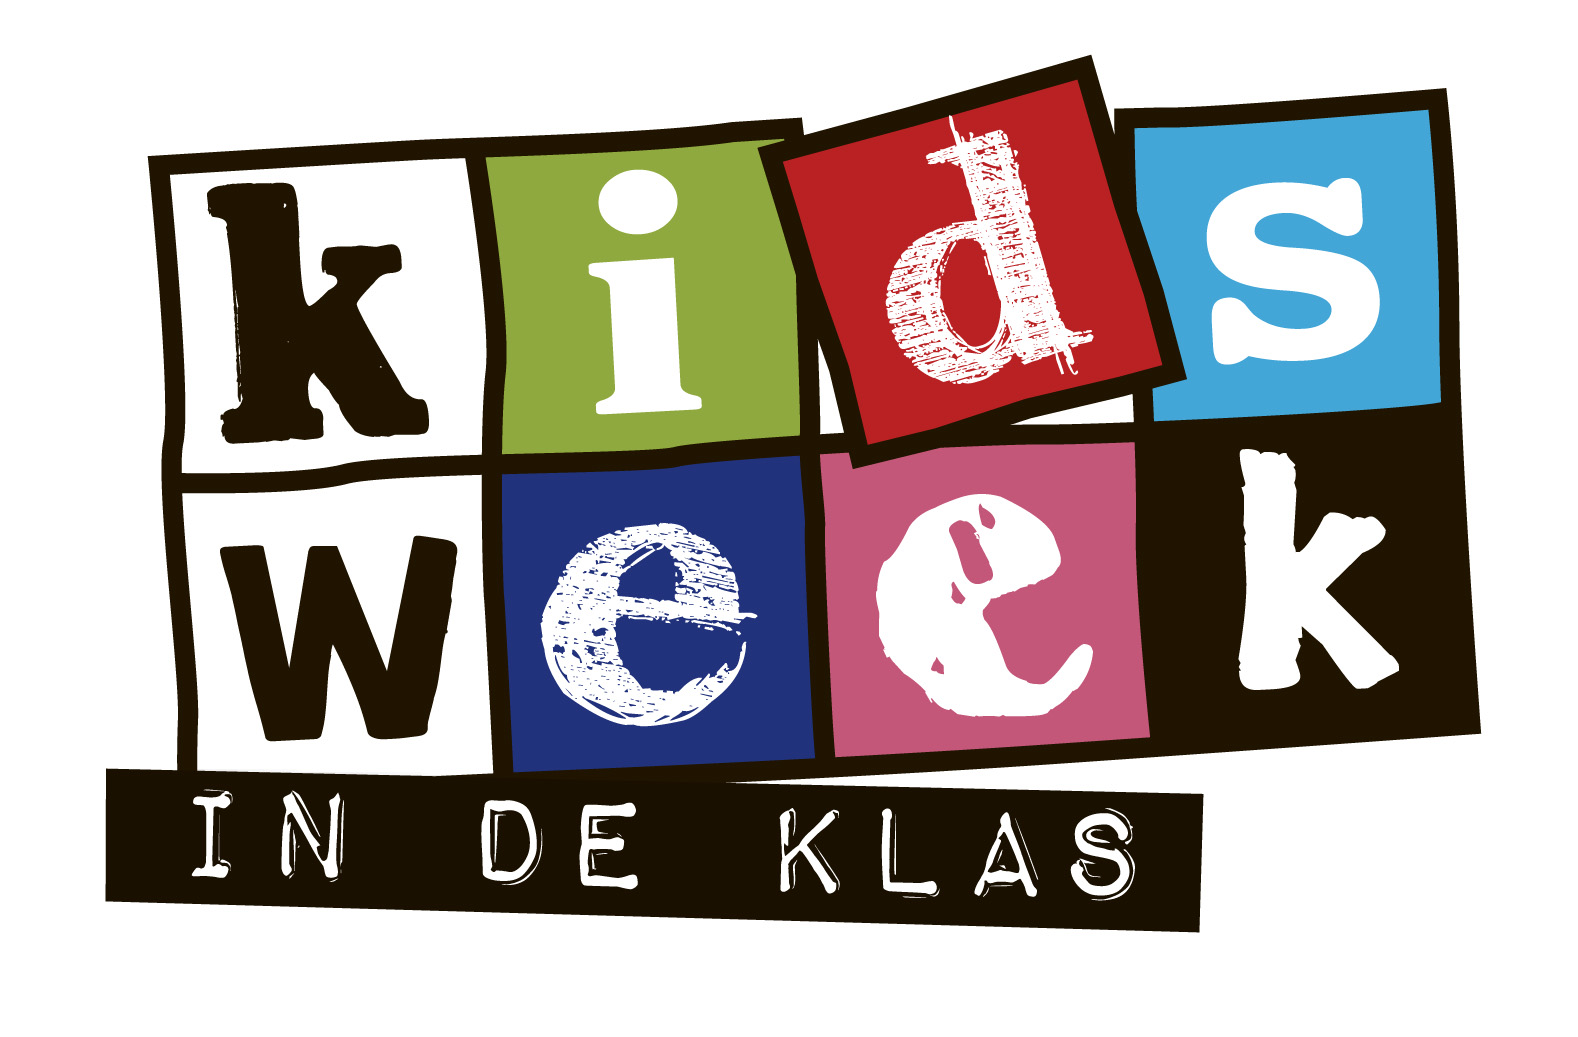 Kidsweek